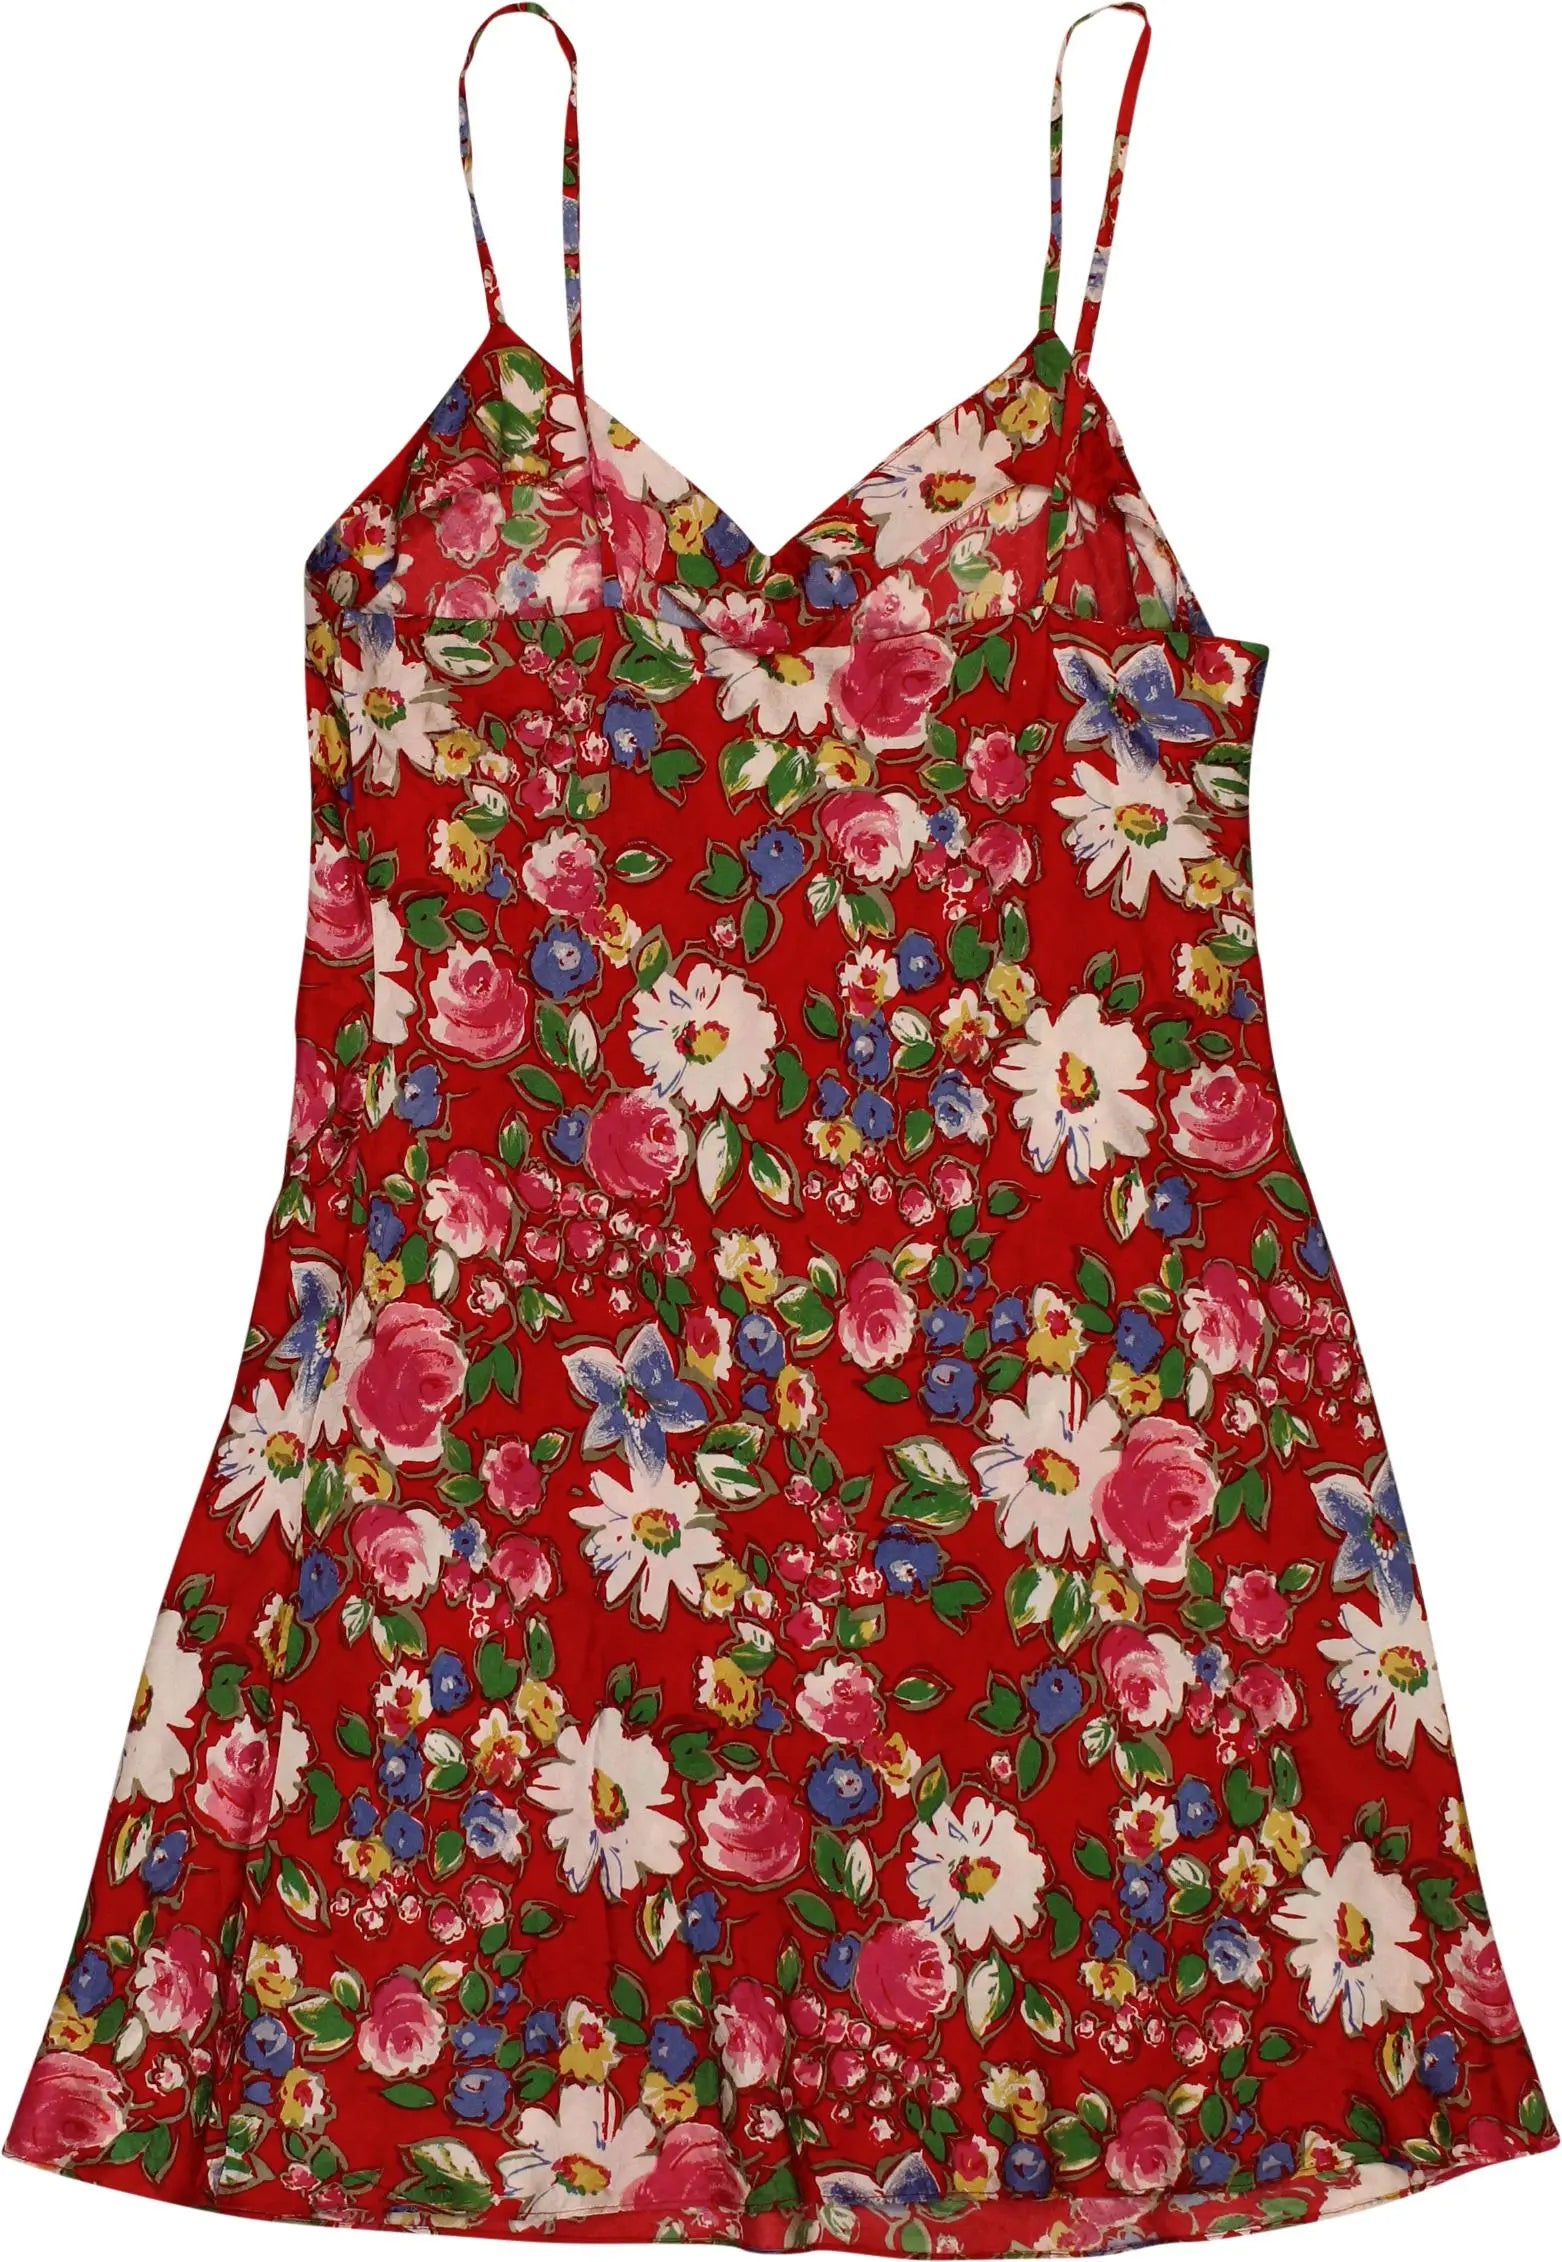 Nicole Jacqueline - Silk Slip Dress- ThriftTale.com - Vintage and second handclothing